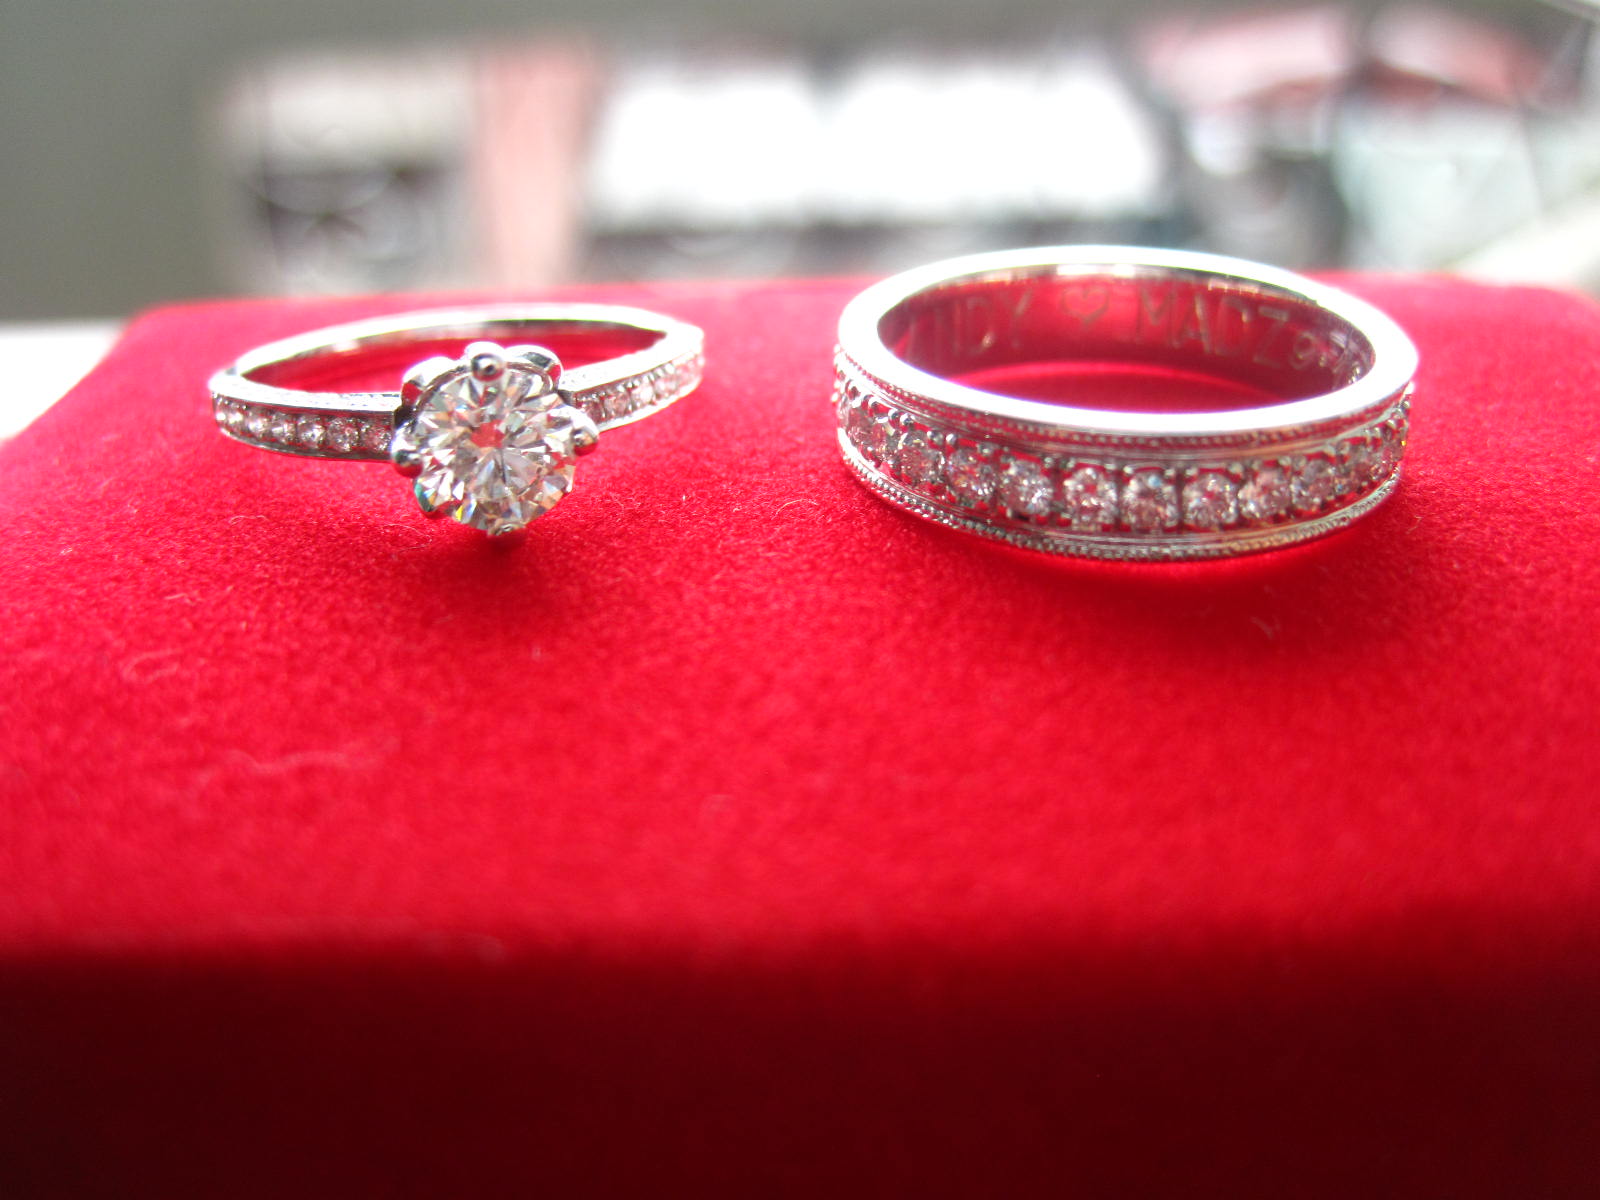  Wedding  rings  for beautiful women Cheap  wedding  rings  in 